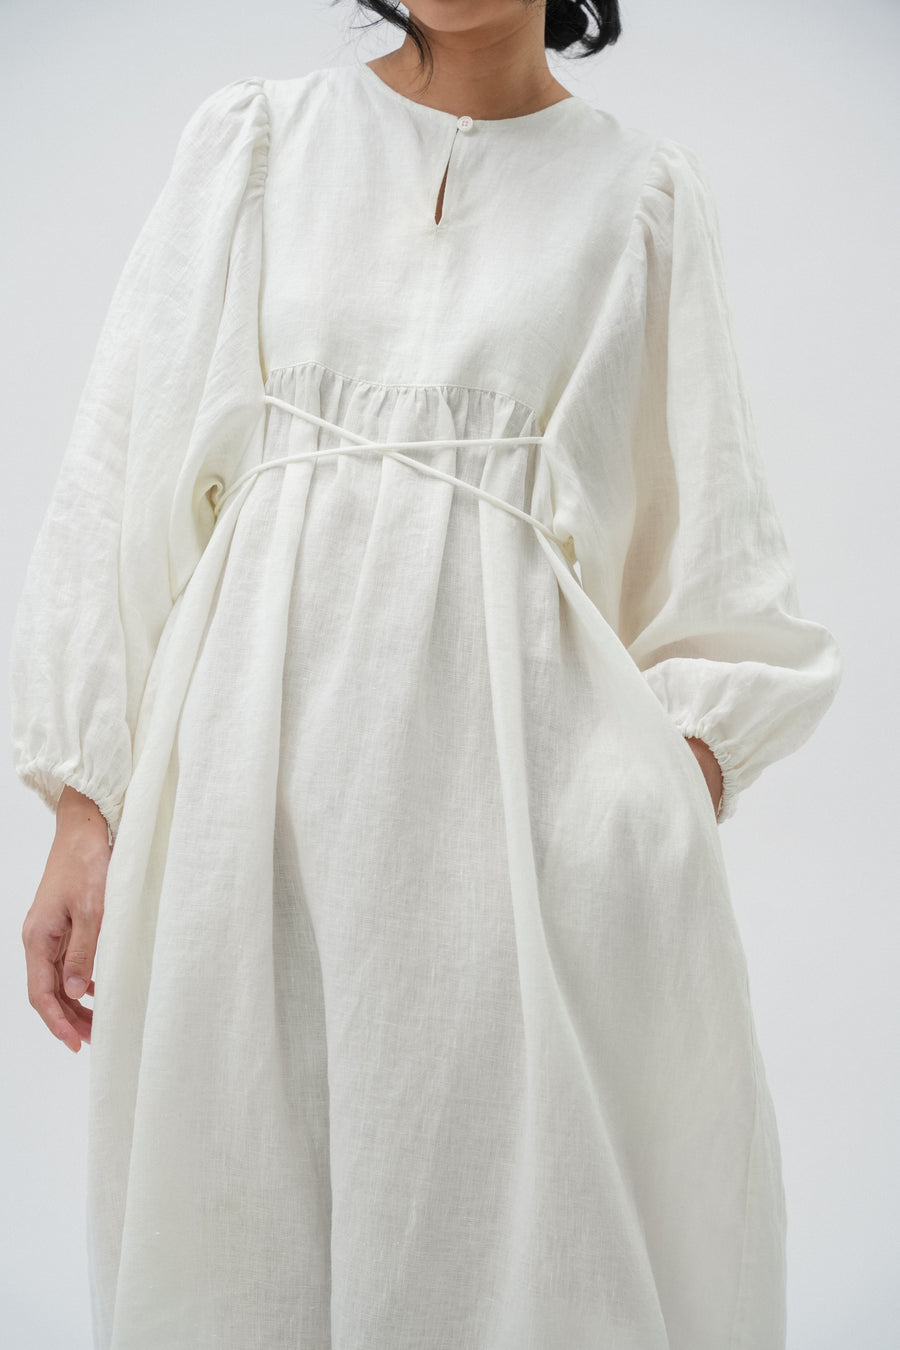 Daydream Linen Dress in White